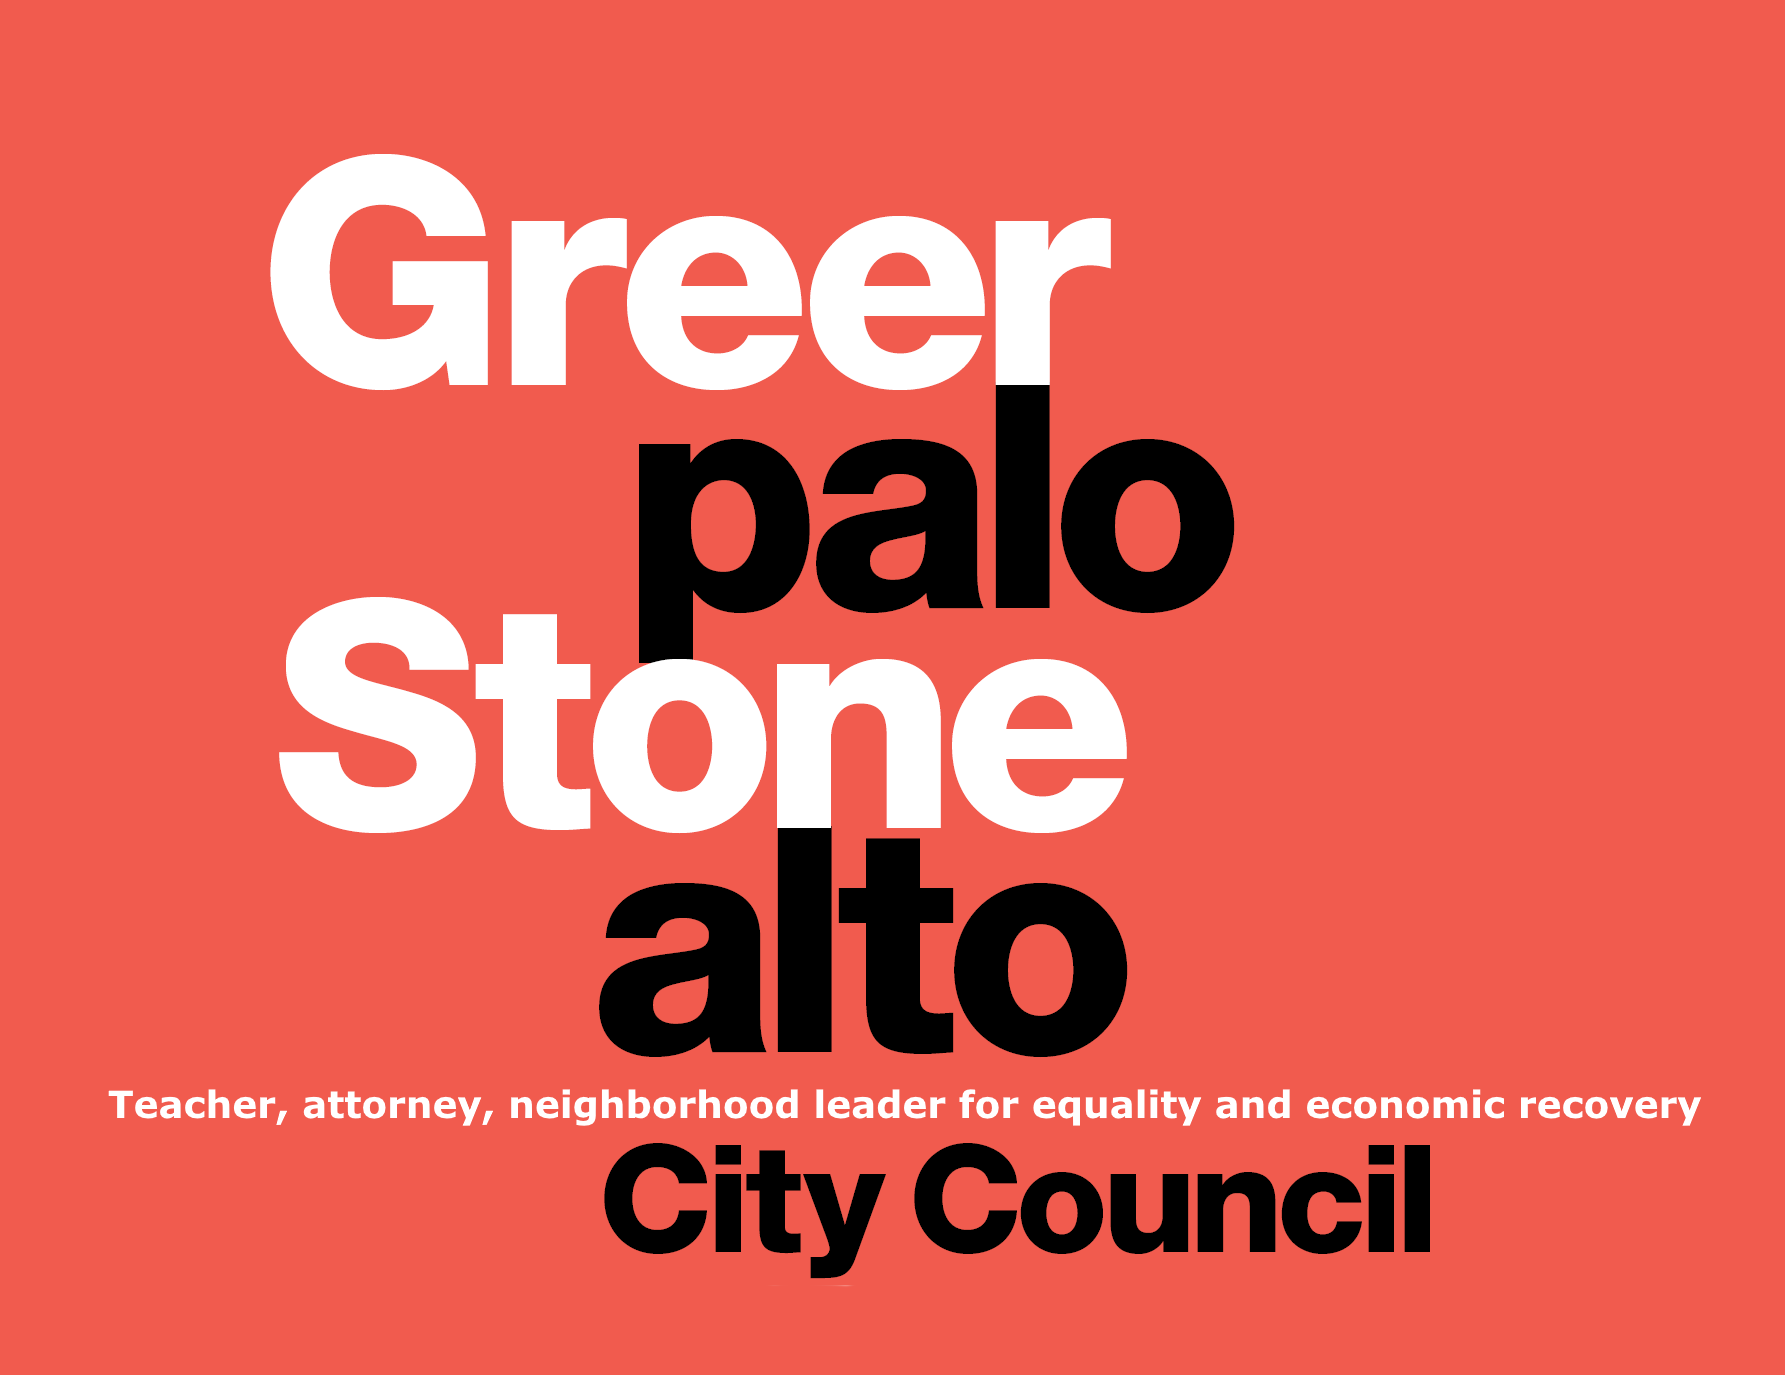 Greer Stone Palo Alto City Council